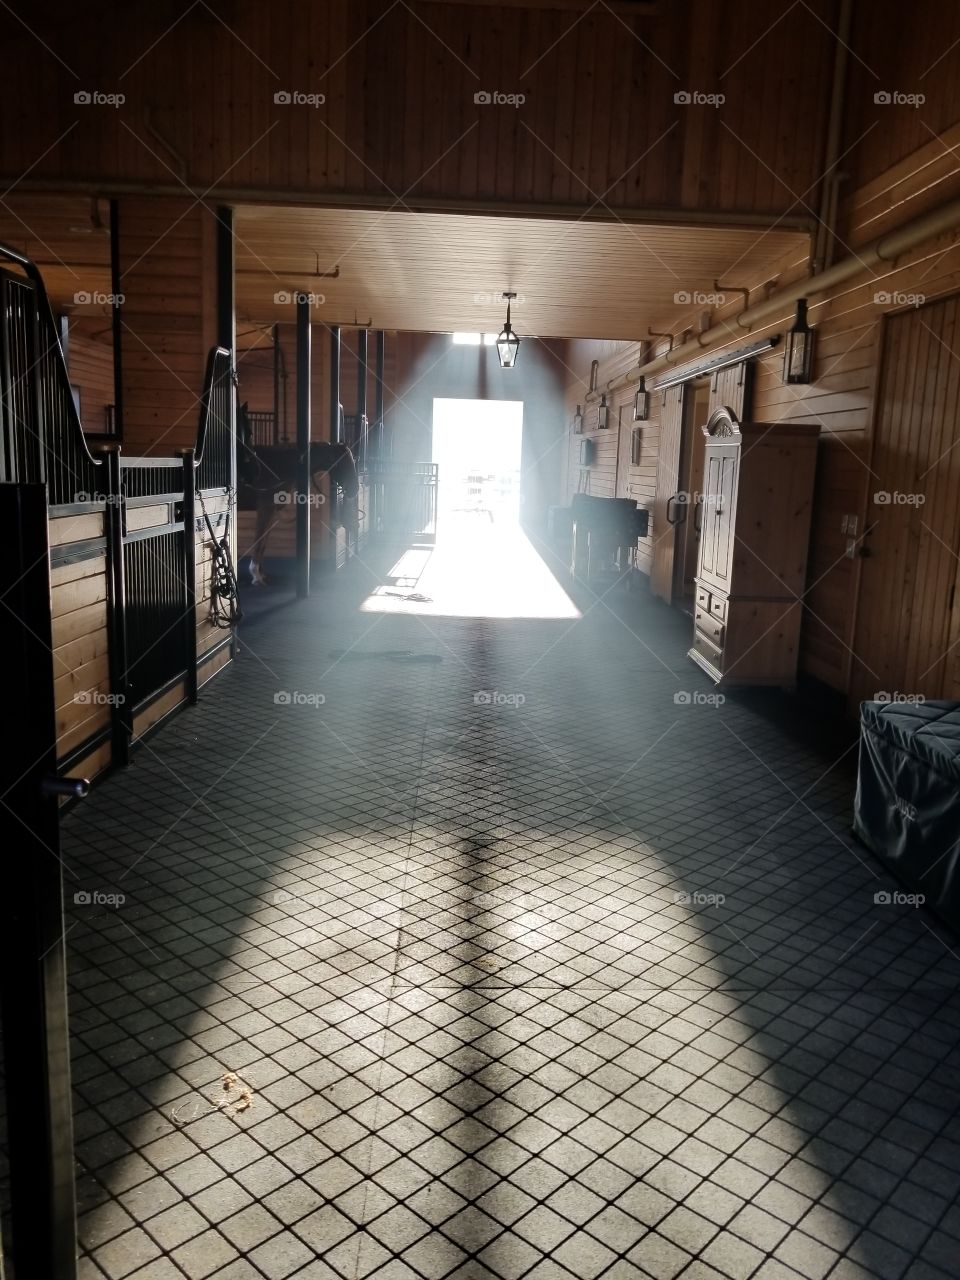 Sun Rays in the Barn